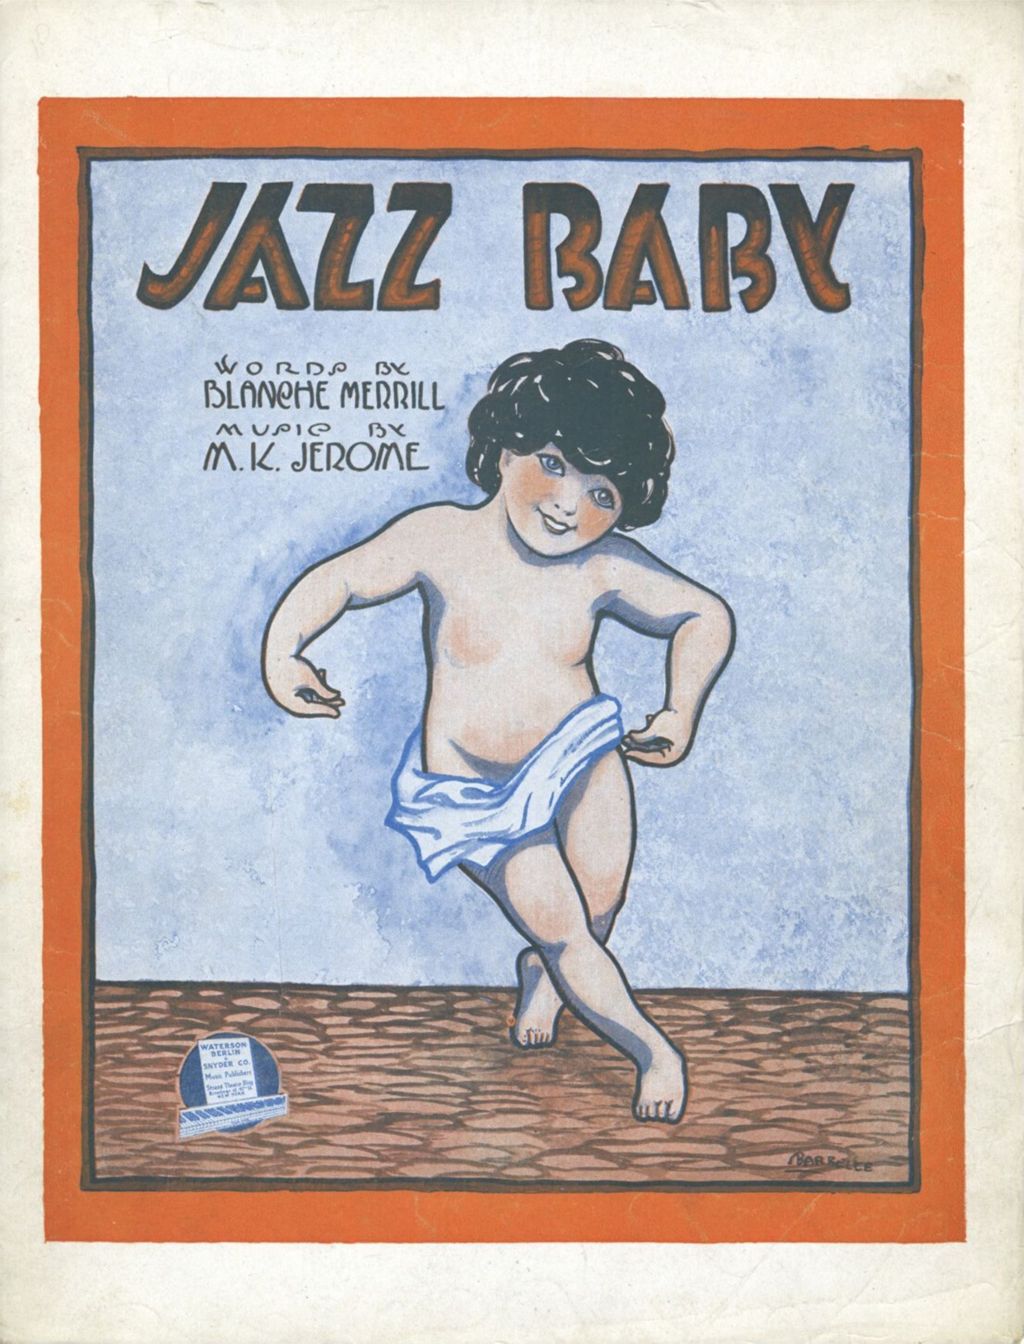 Miniature of Jazz Baby